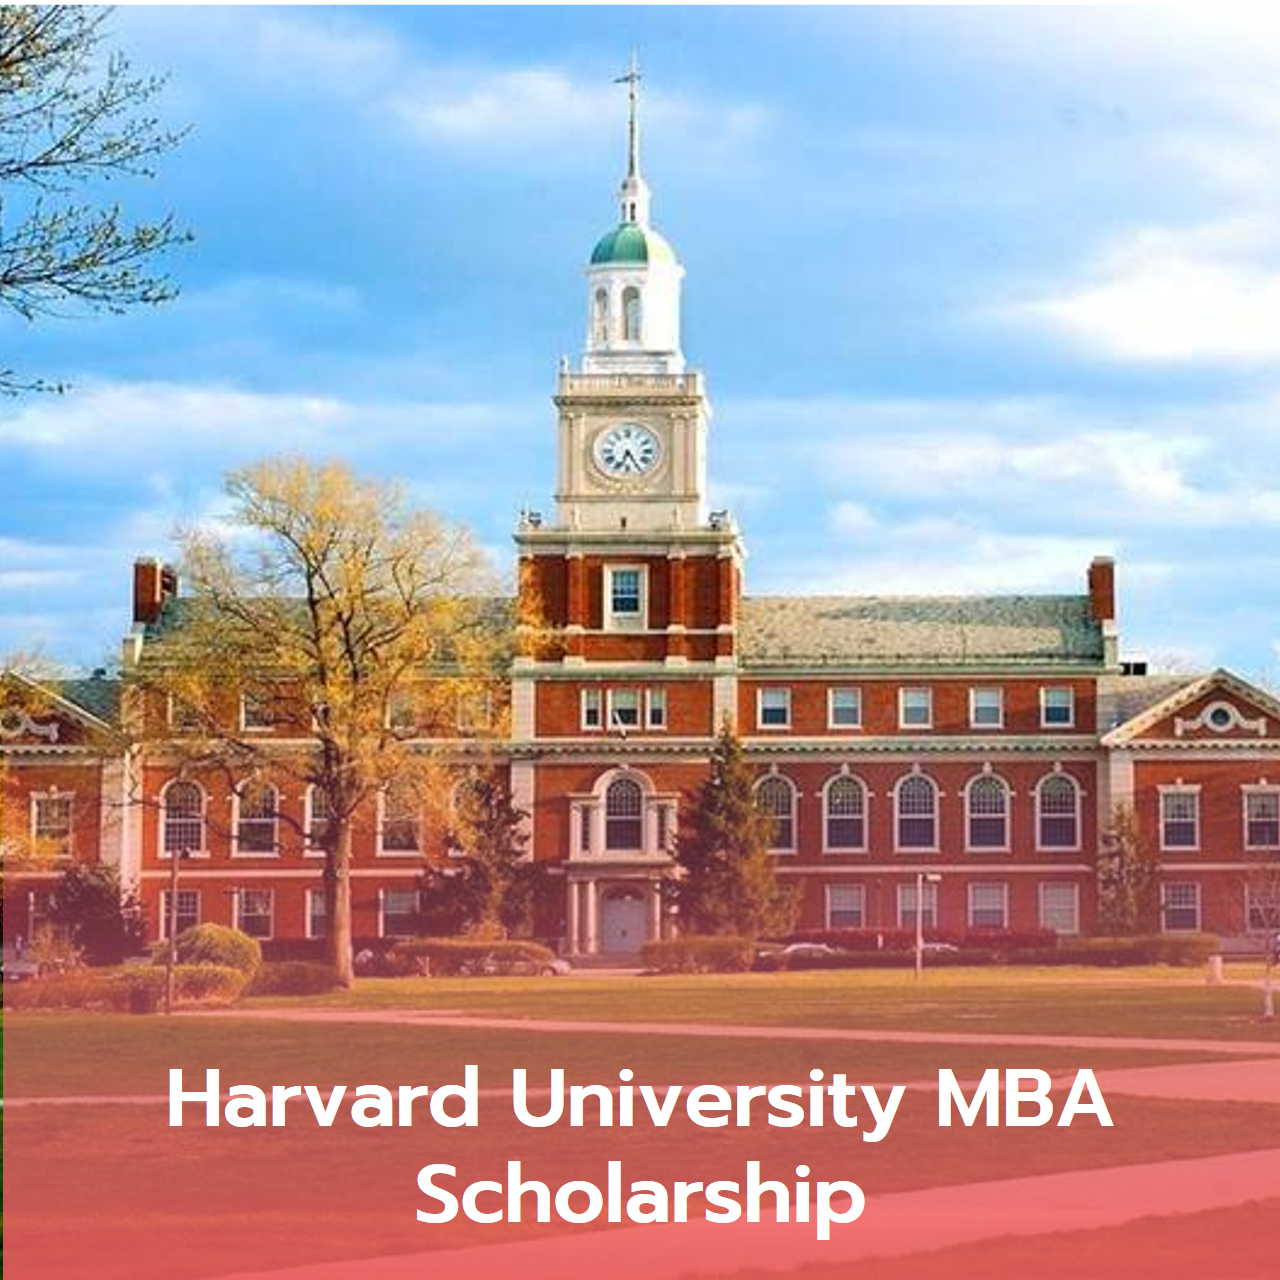  Harvard University MBA Scholarship